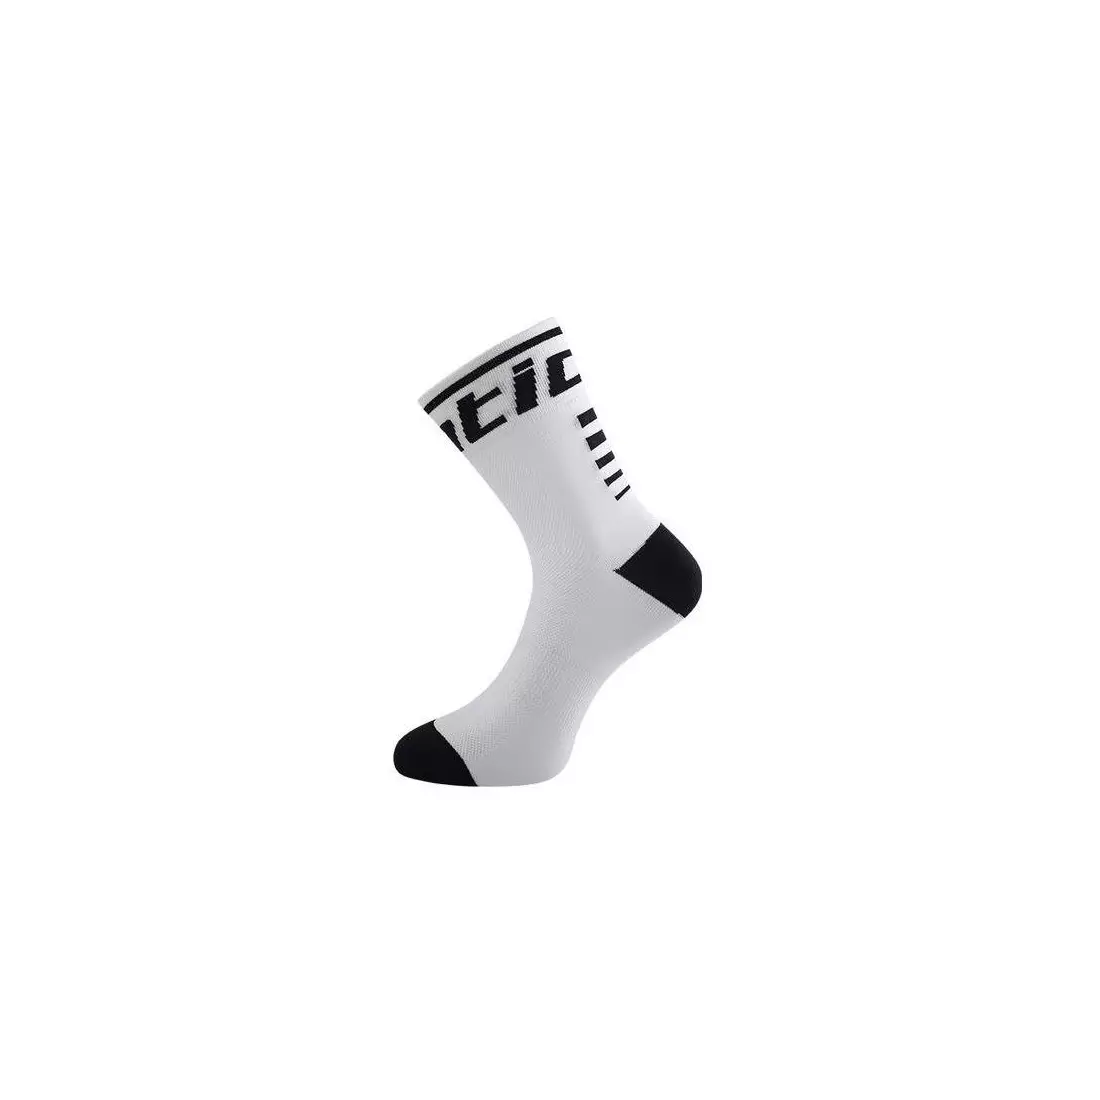 SANTIC cycling socks white and black 6C09054W